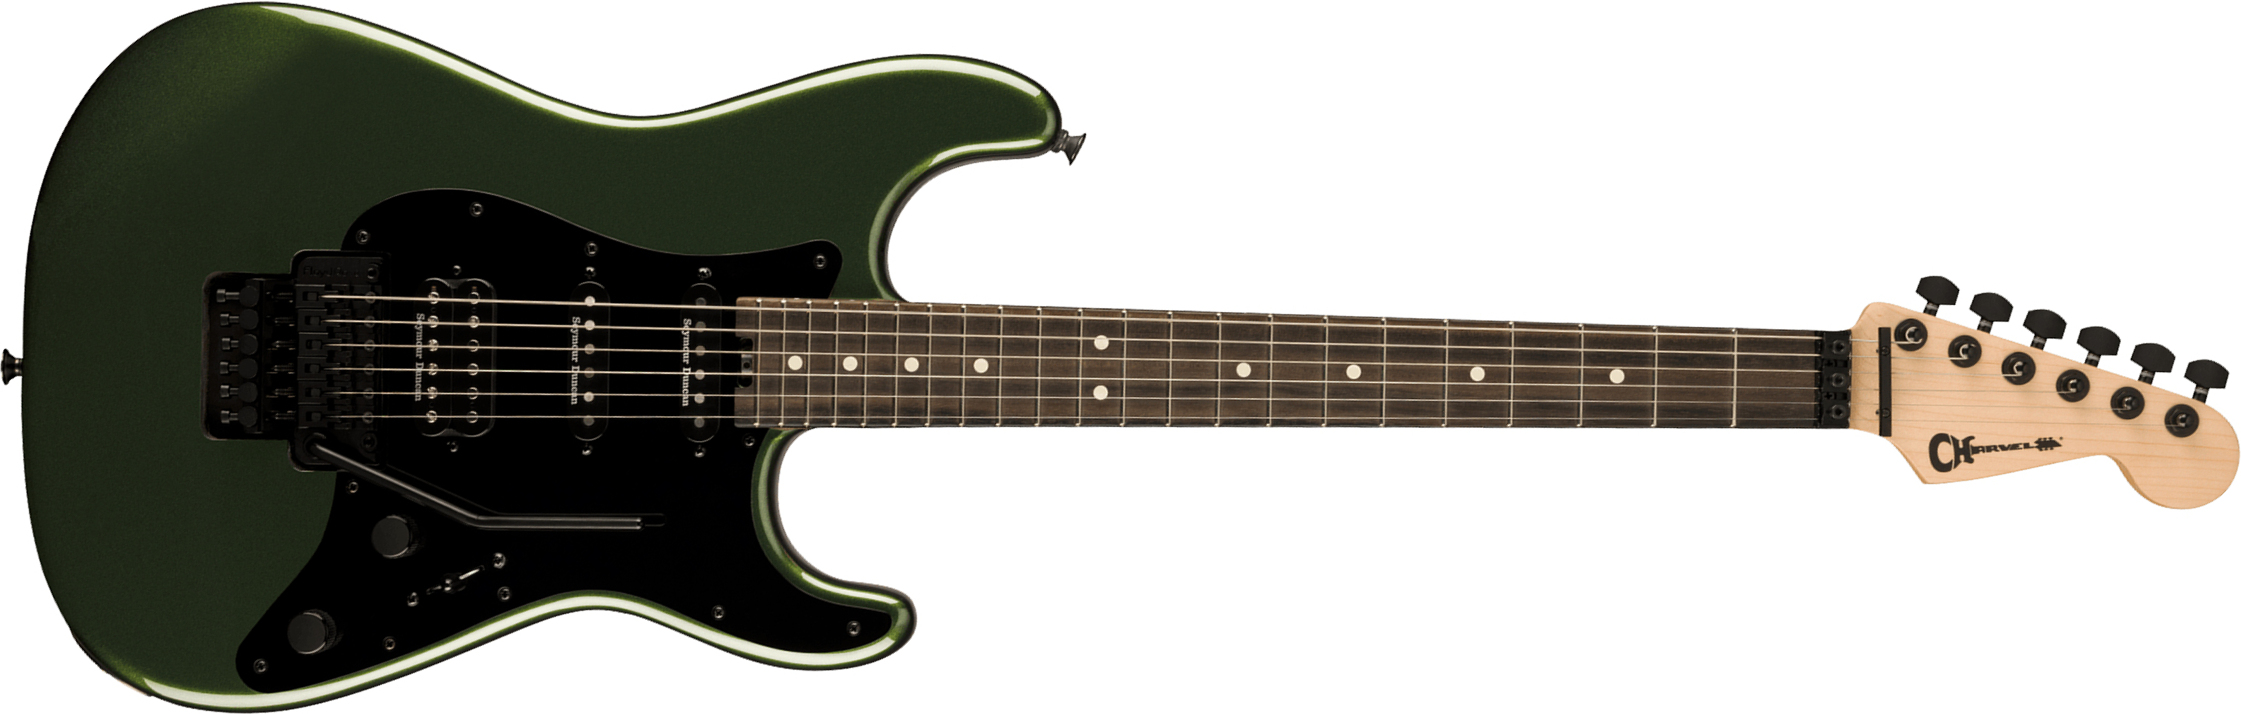 Charvel So-cal Style 1 Hss Fr E Pro-mod Seymour Duncan Eb - Lambo Green - Guitarra eléctrica con forma de str. - Main picture